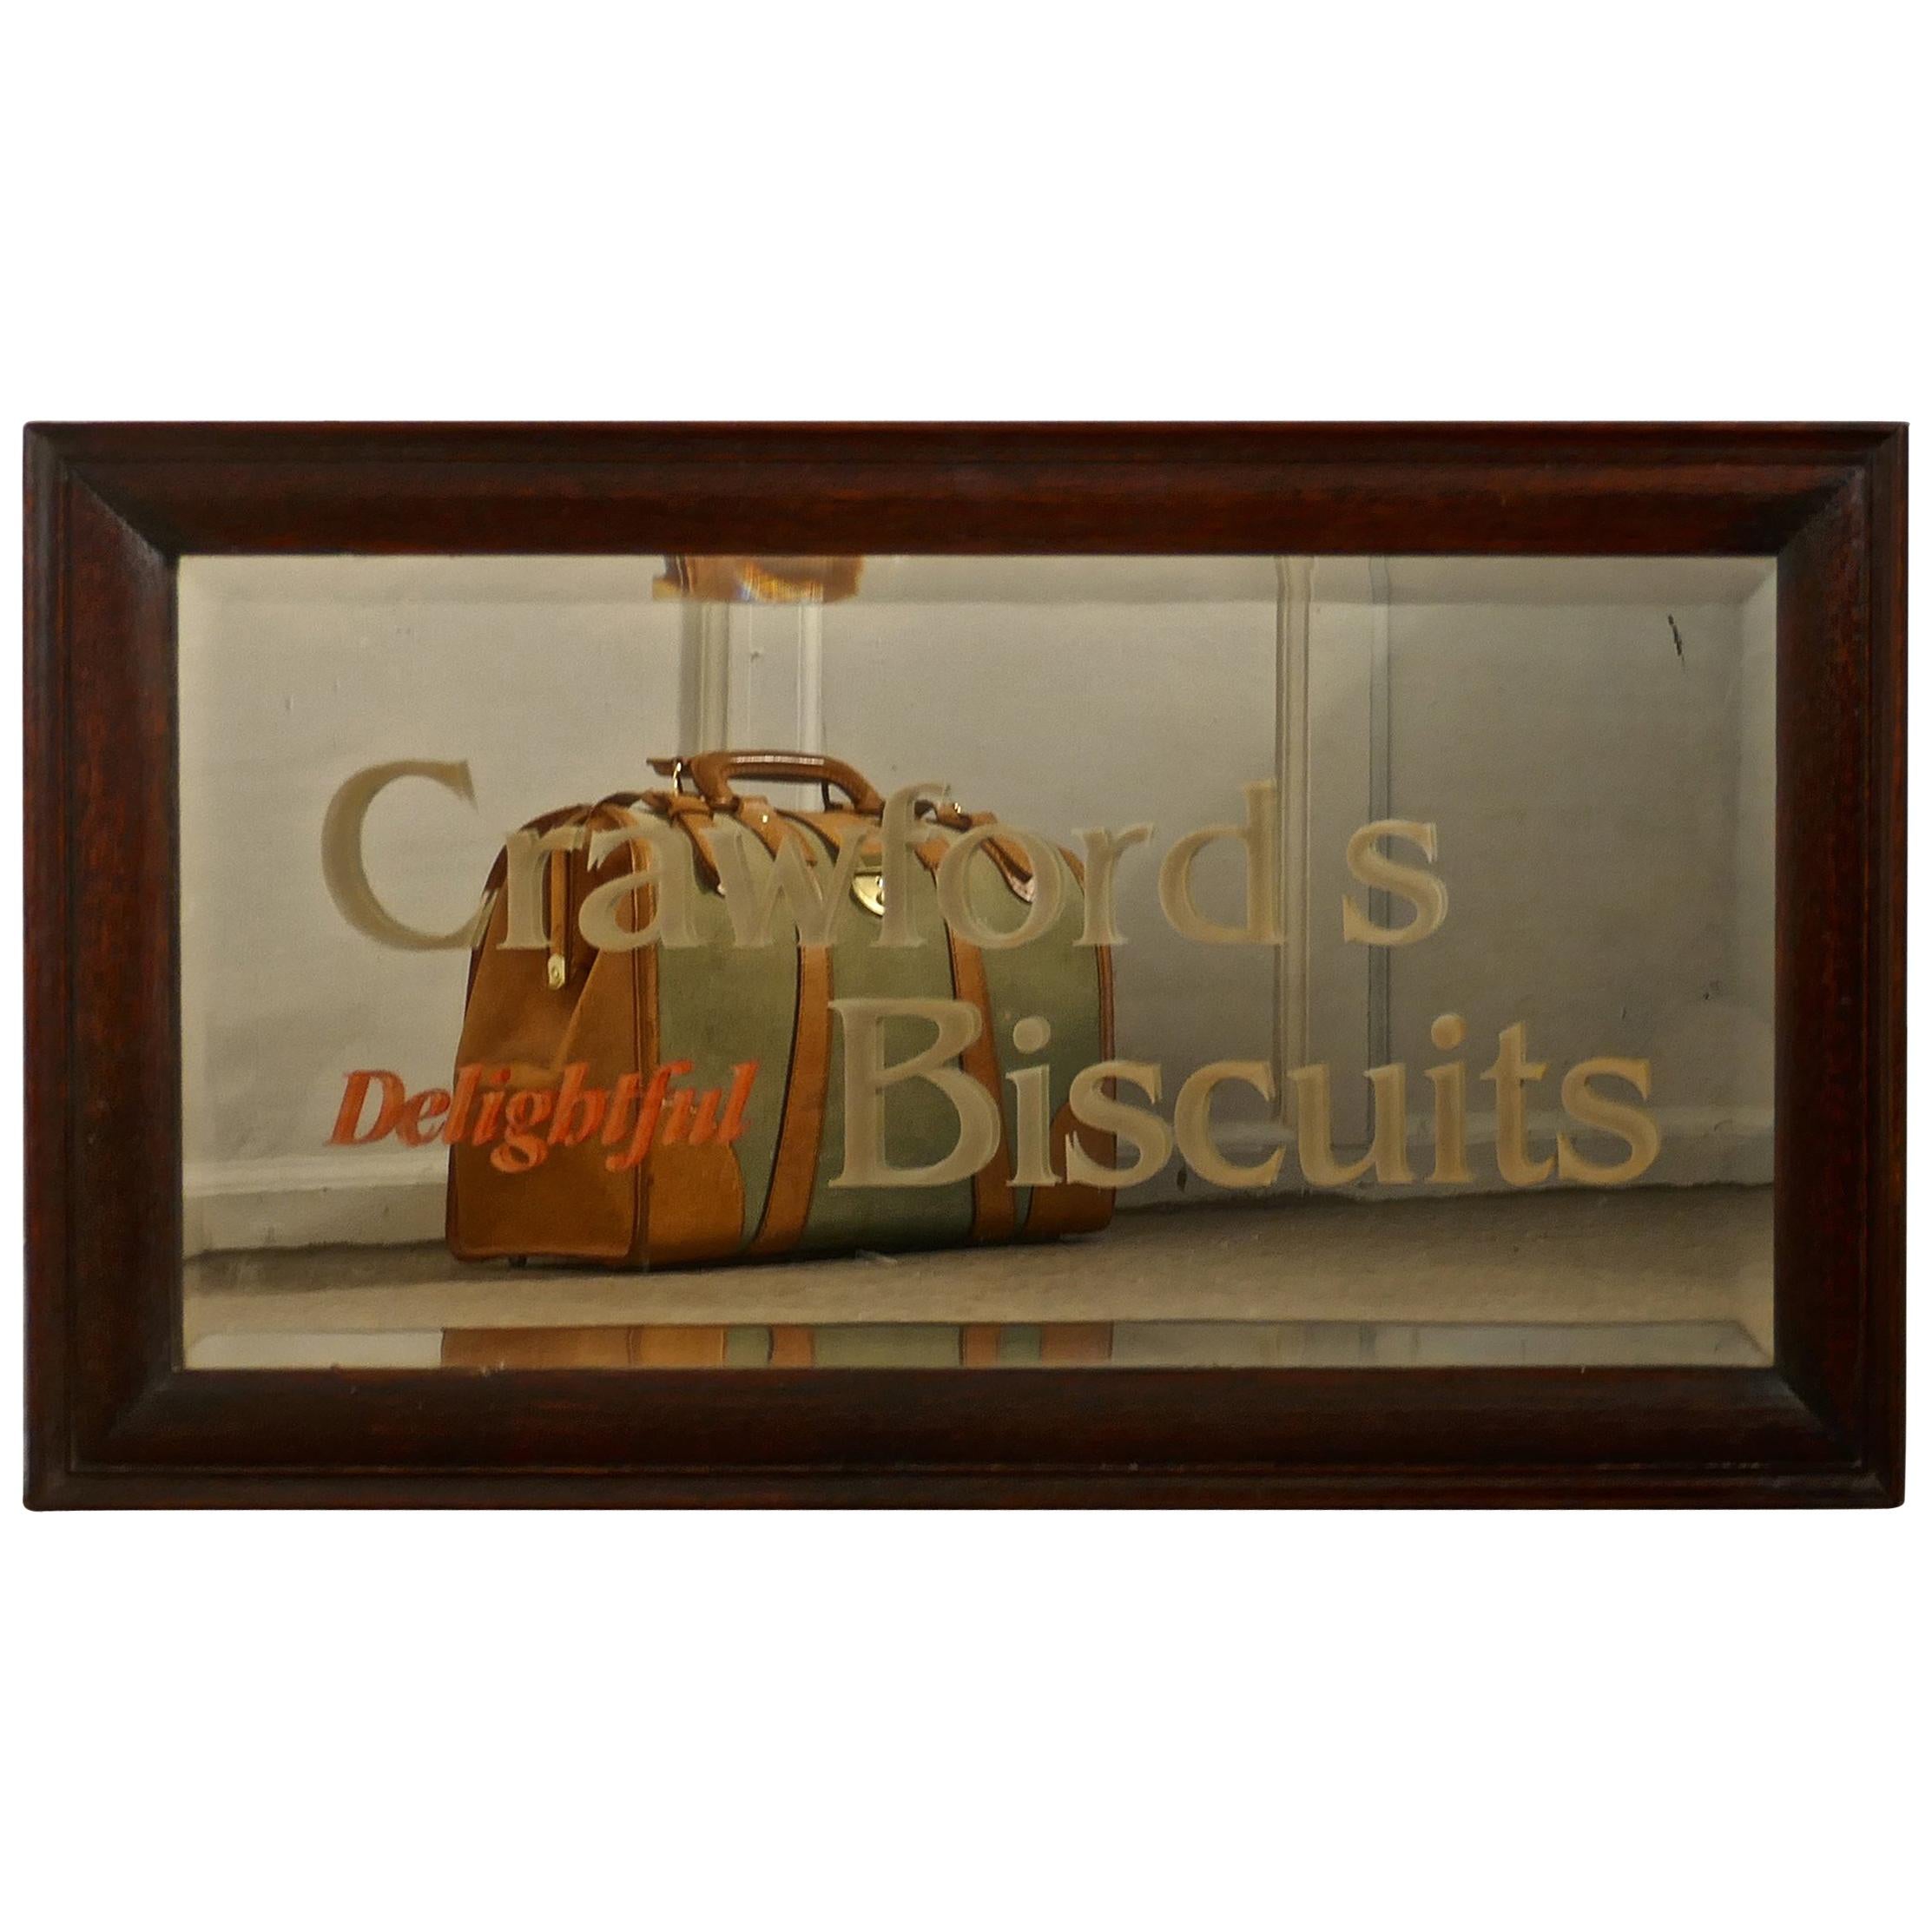 Miroir publicitaire Crawford's Delightful Biscuits Baker or Cafe  en vente